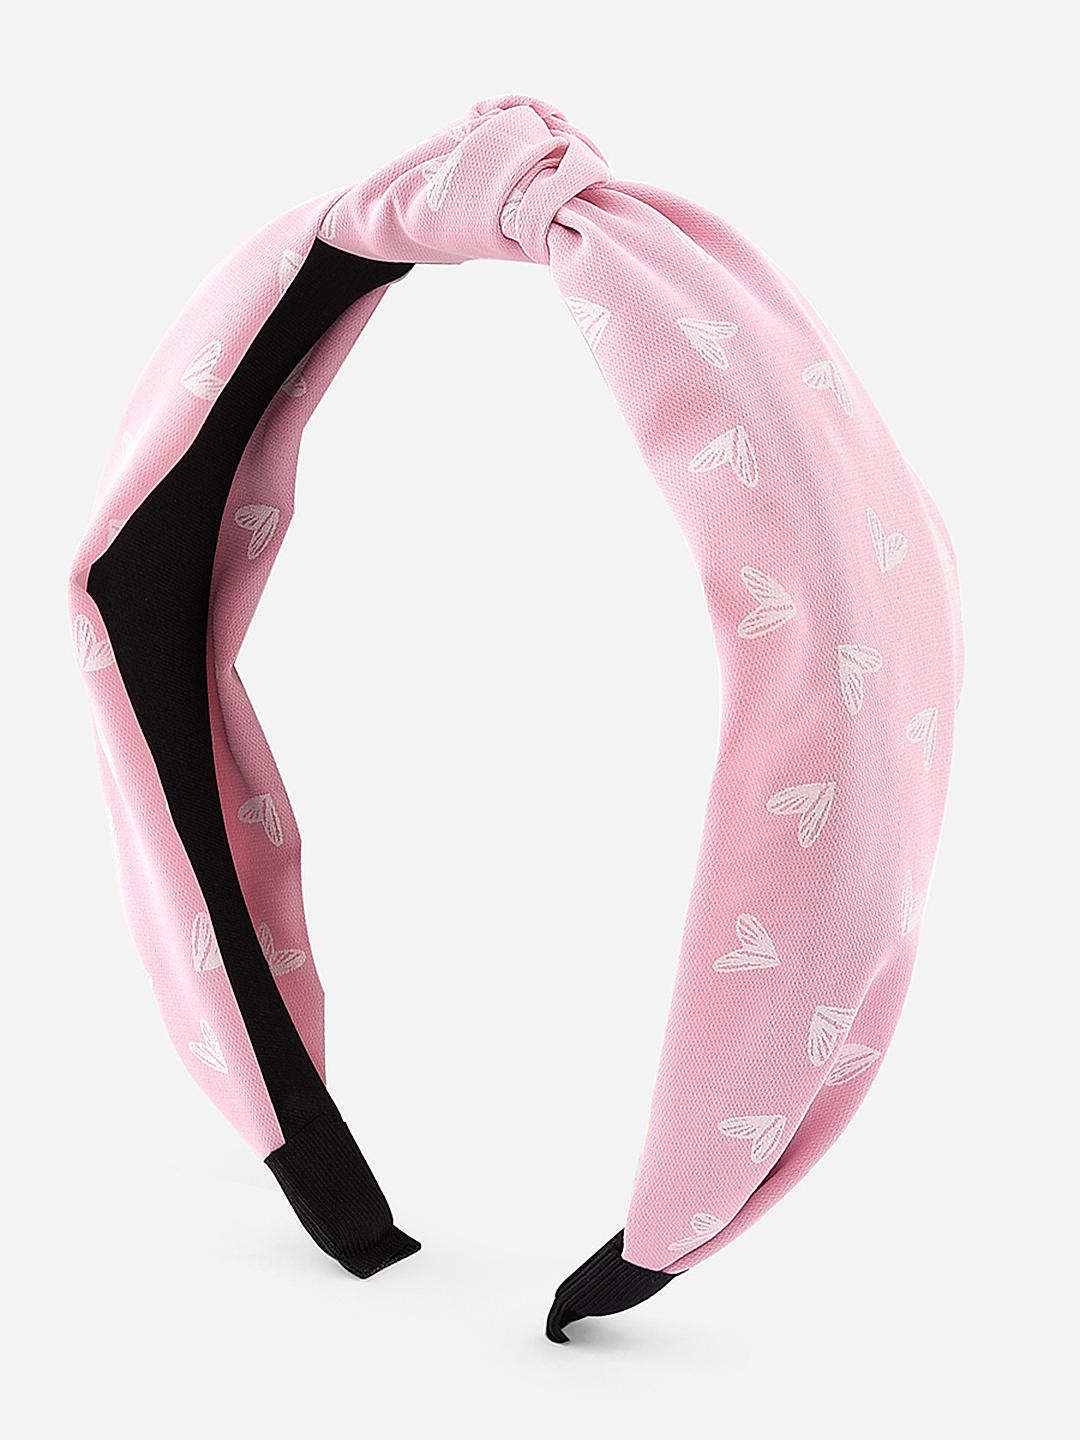 ToniQ Monochrome Pink heart print Hair Band and white pearl bow hair clip  Gift Set (set of 2)